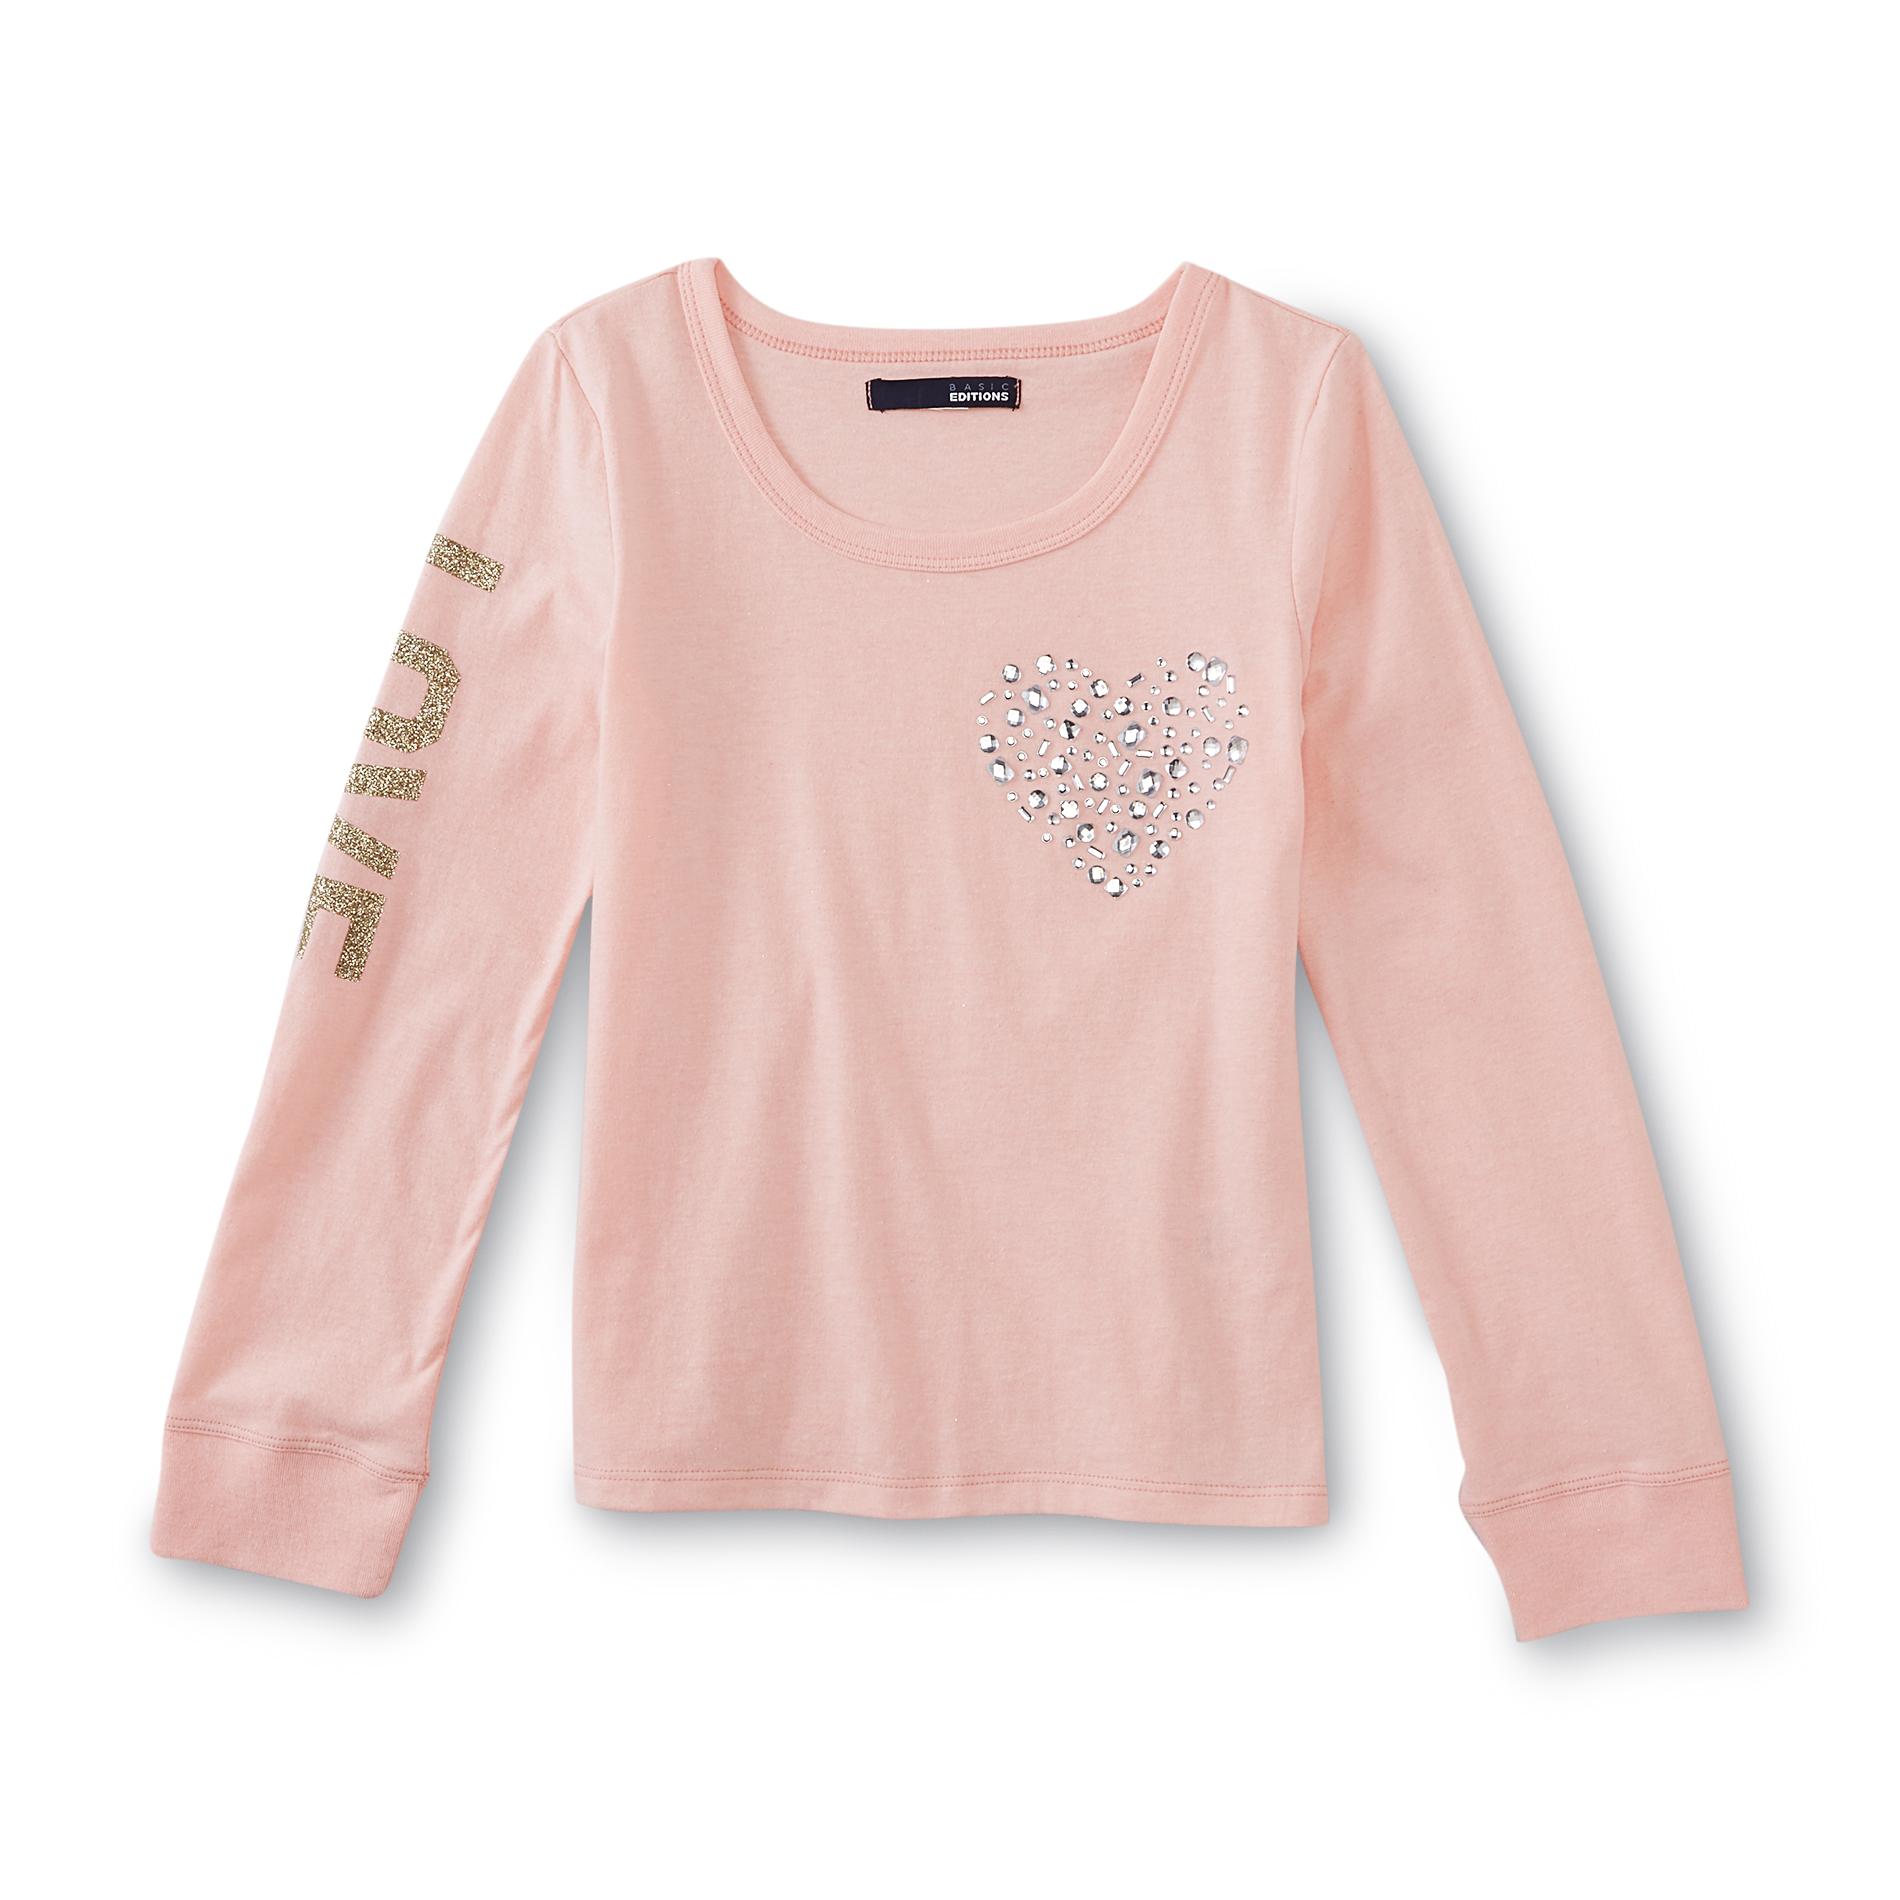 Basic Editions Girl's Long-Sleeve Graphic T-Shirt - Heart & Love